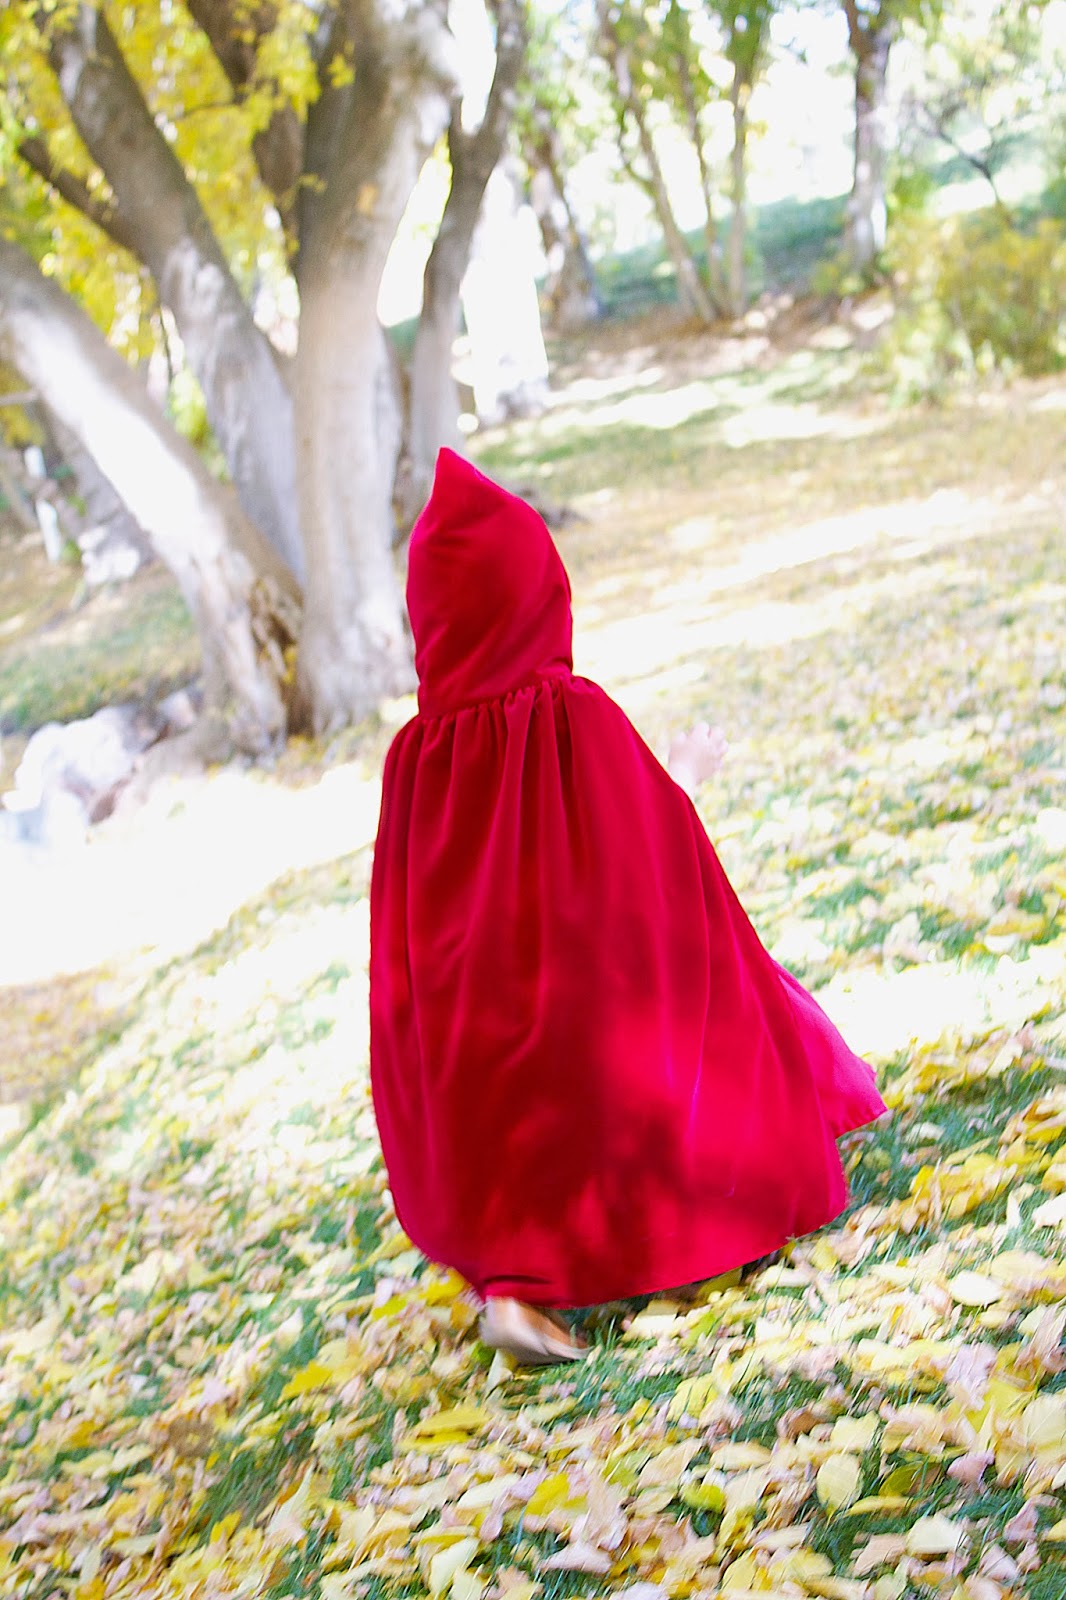 do it yourself divas: DIY: Little Red Riding Hood Costume/Cloak 2T-4T